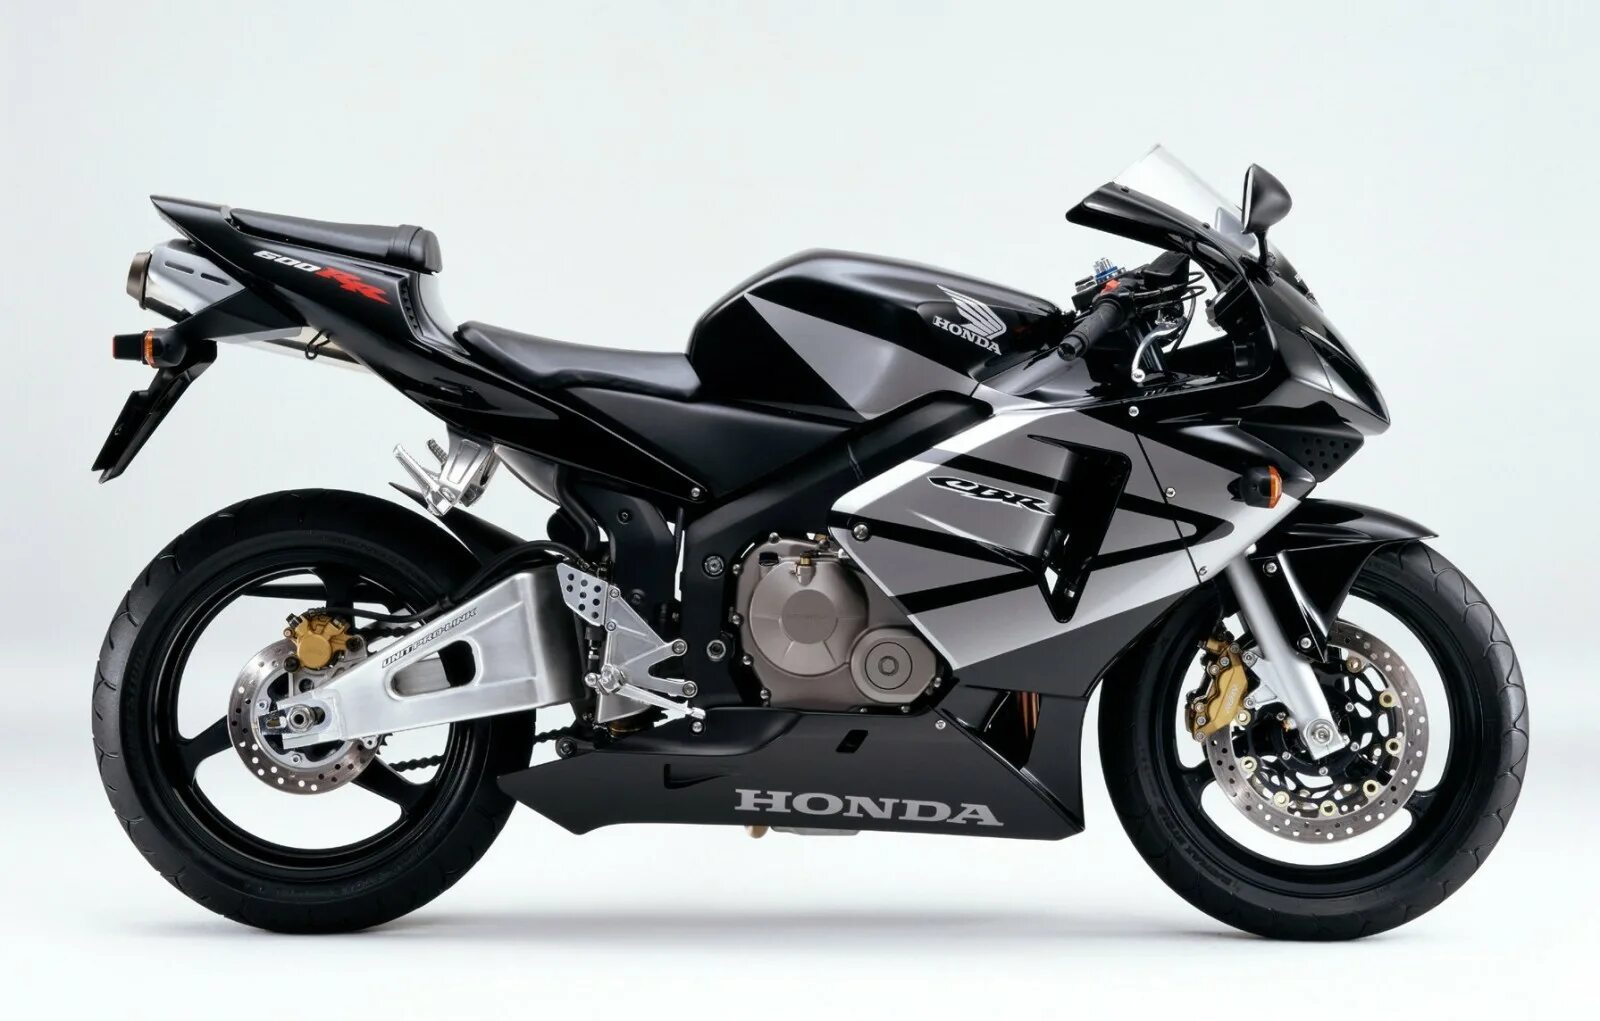 Honda cbr600rr. Мотоцикл Honda CBR 600. Мотоцикл Хонда CBR 600 RR. Honda cbr600rr 2003.